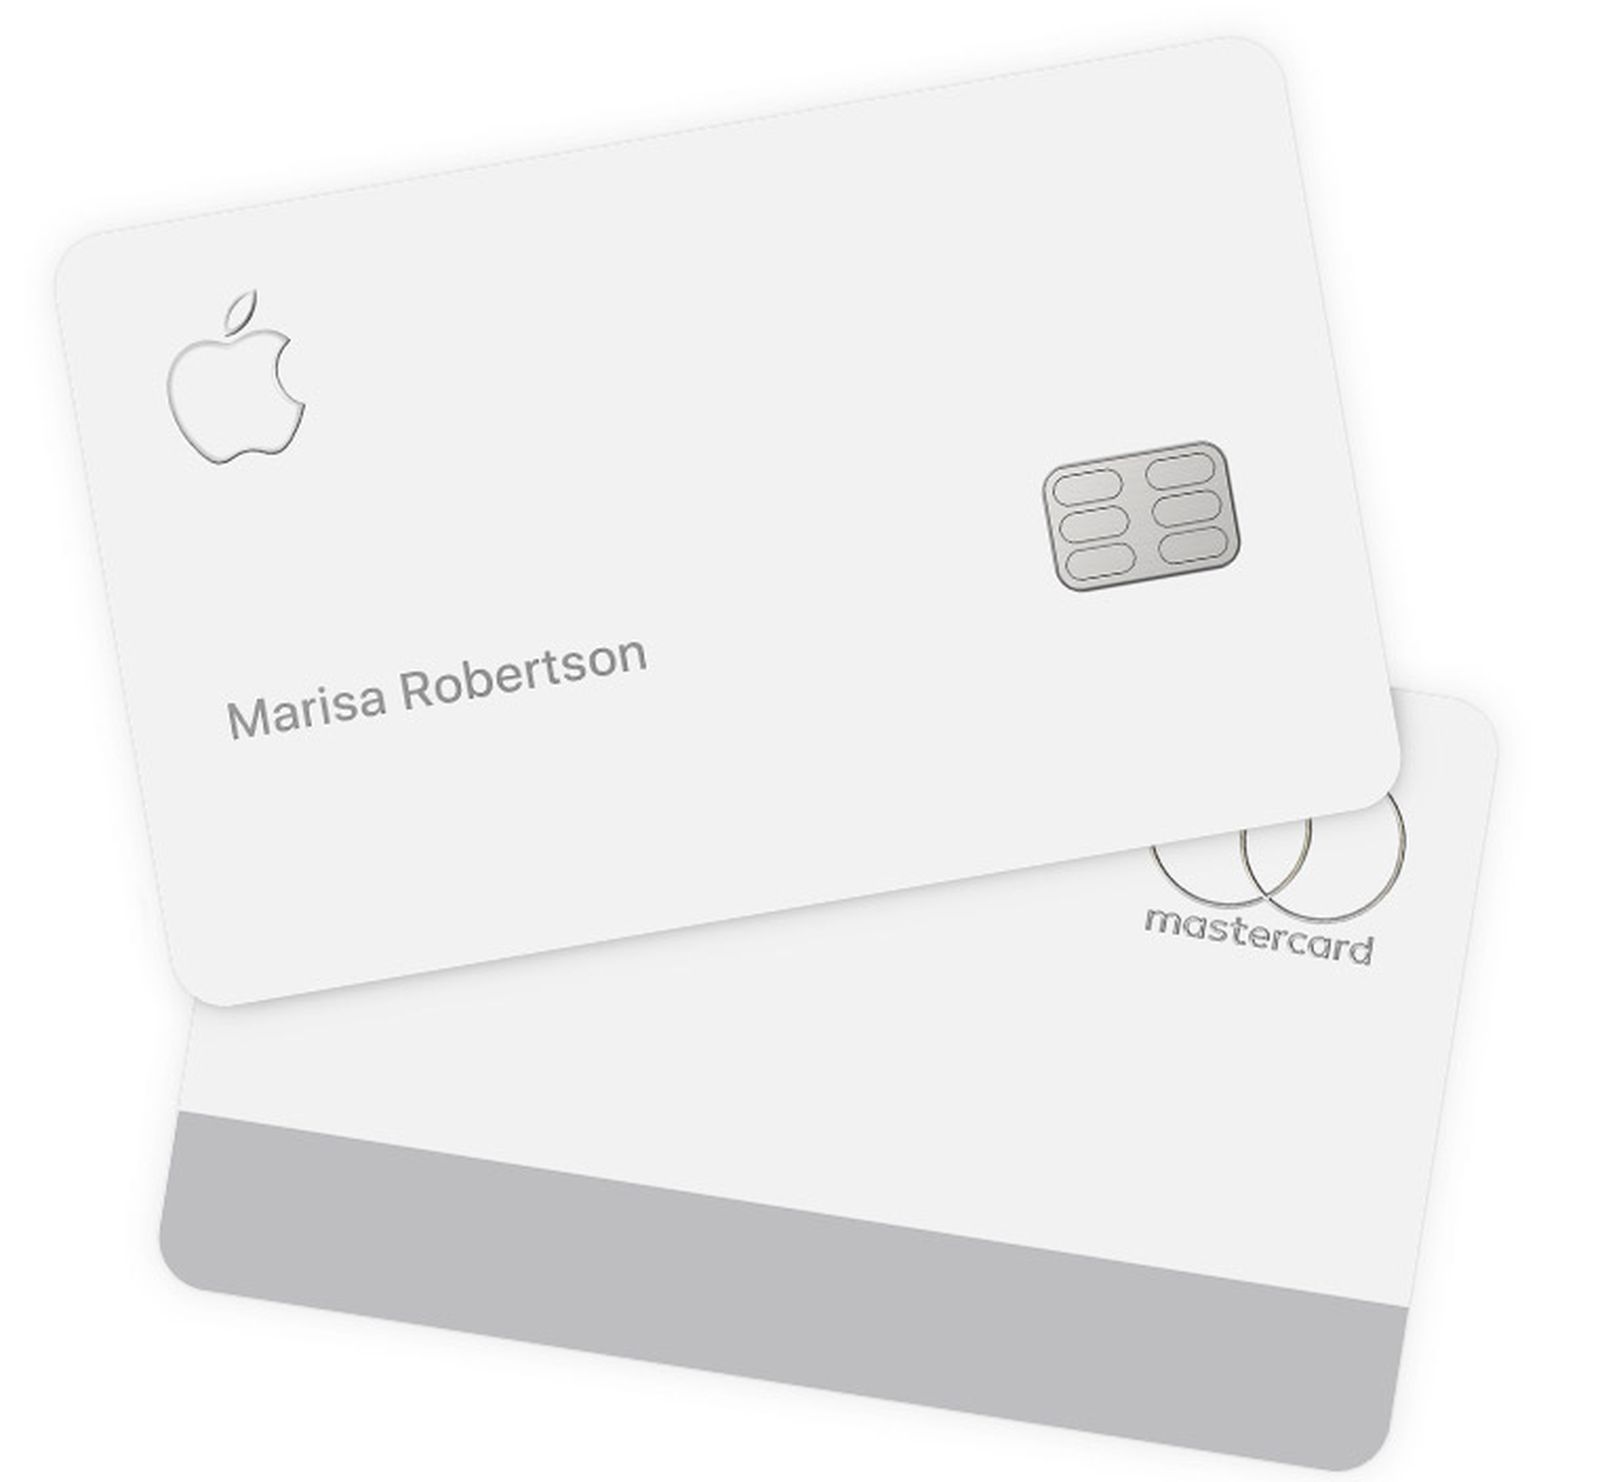 https://images.macrumors.com/t/Cy0MNpY2sMK3YVtar4lVmLrHYk4=/1600x0/article-new/2019/08/apple-card-front-back.jpg